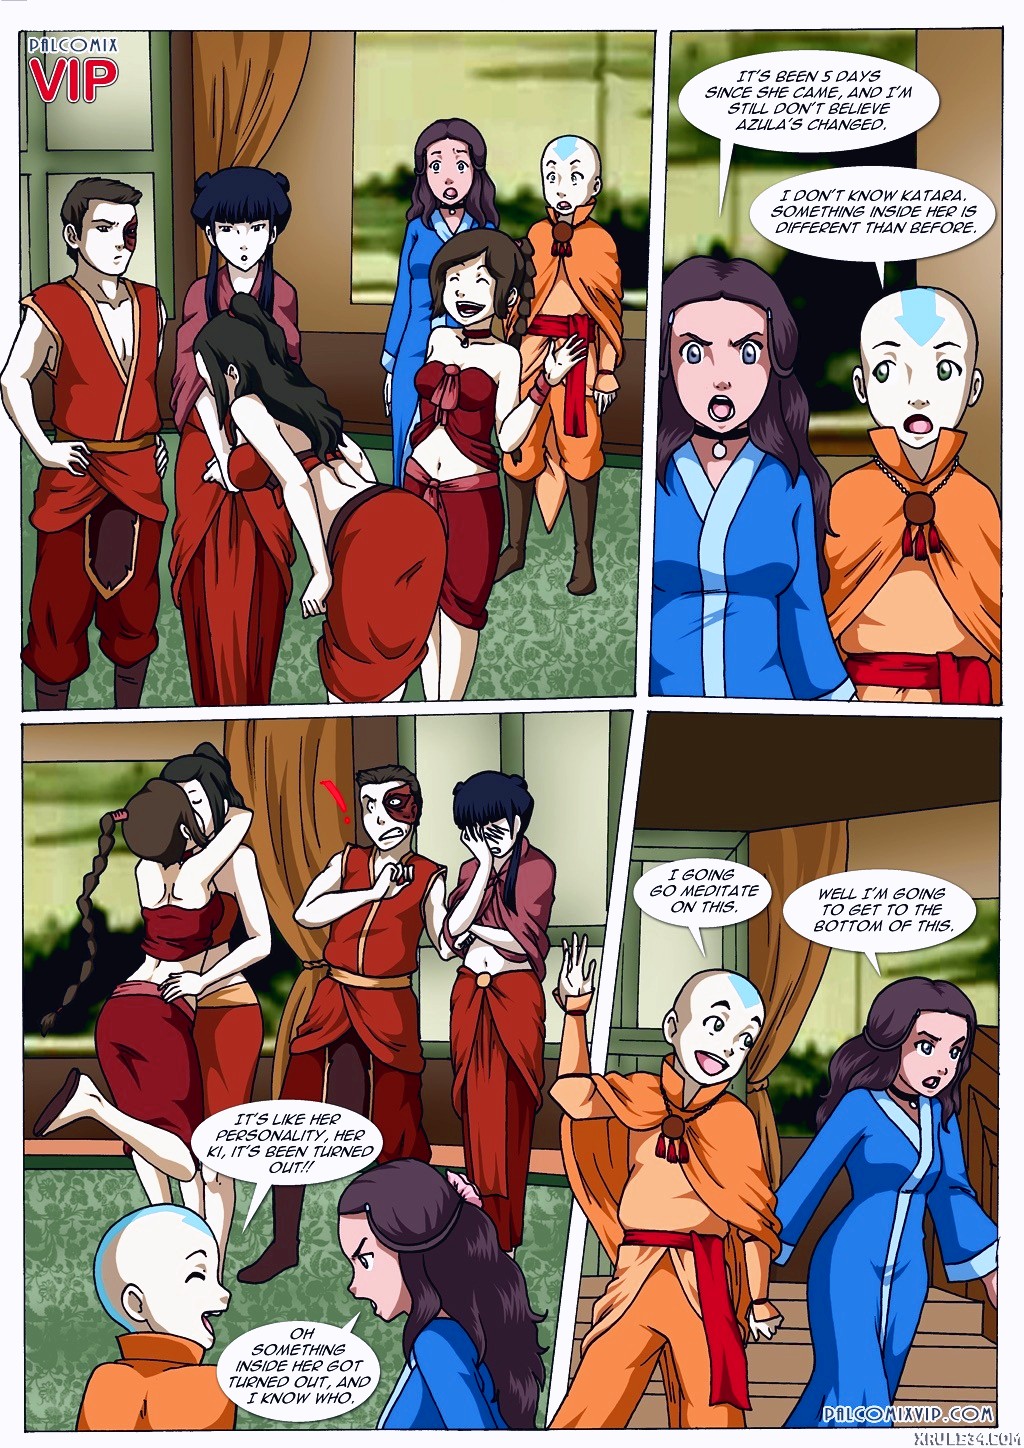 Avatar The Last Jizzbender 2 comic page 002